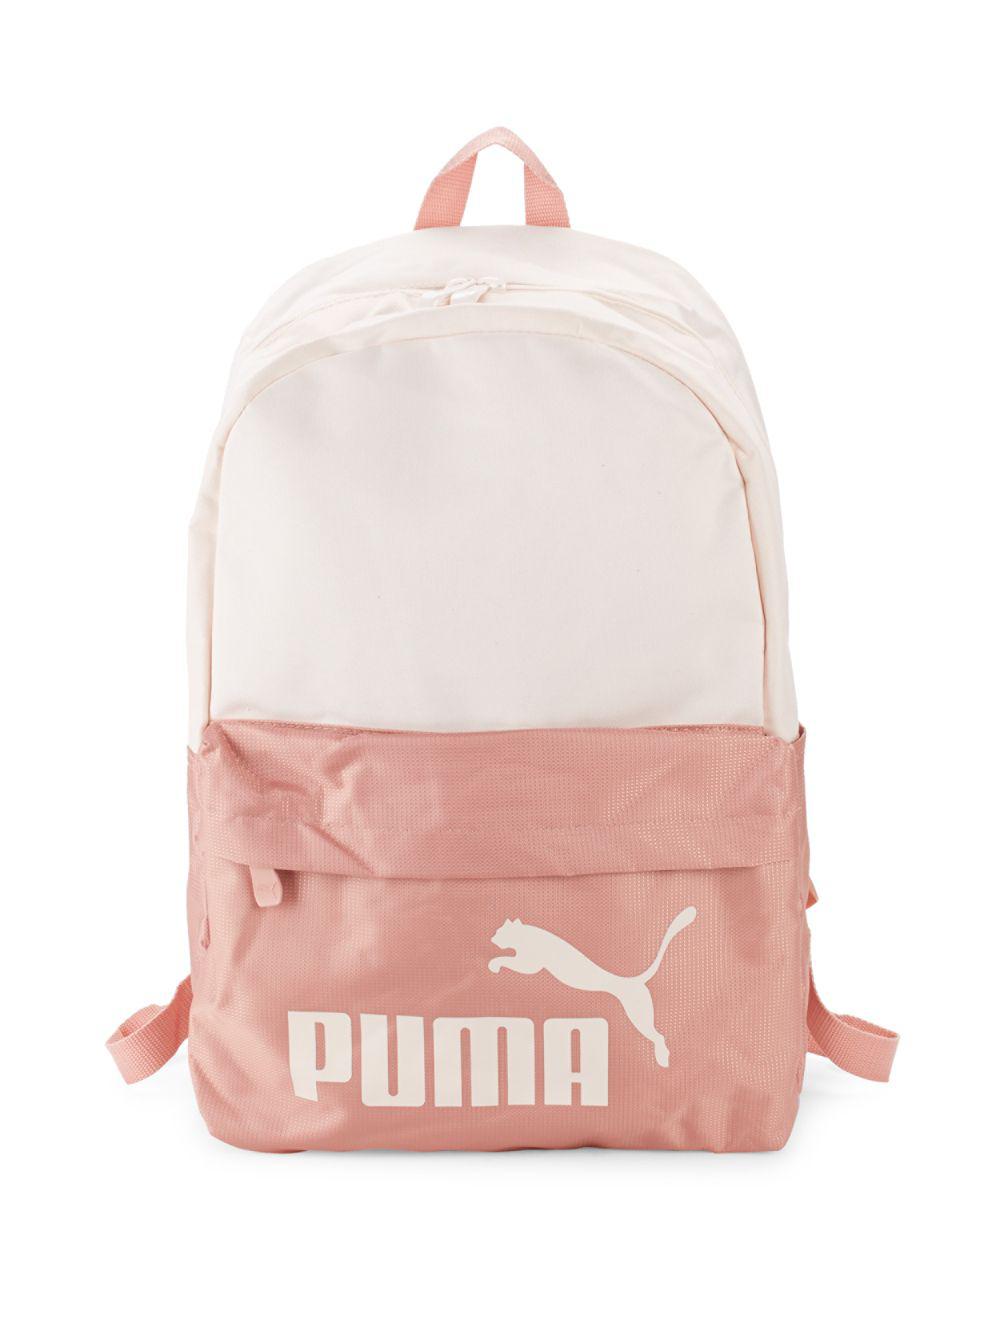 puma lifeline backpack